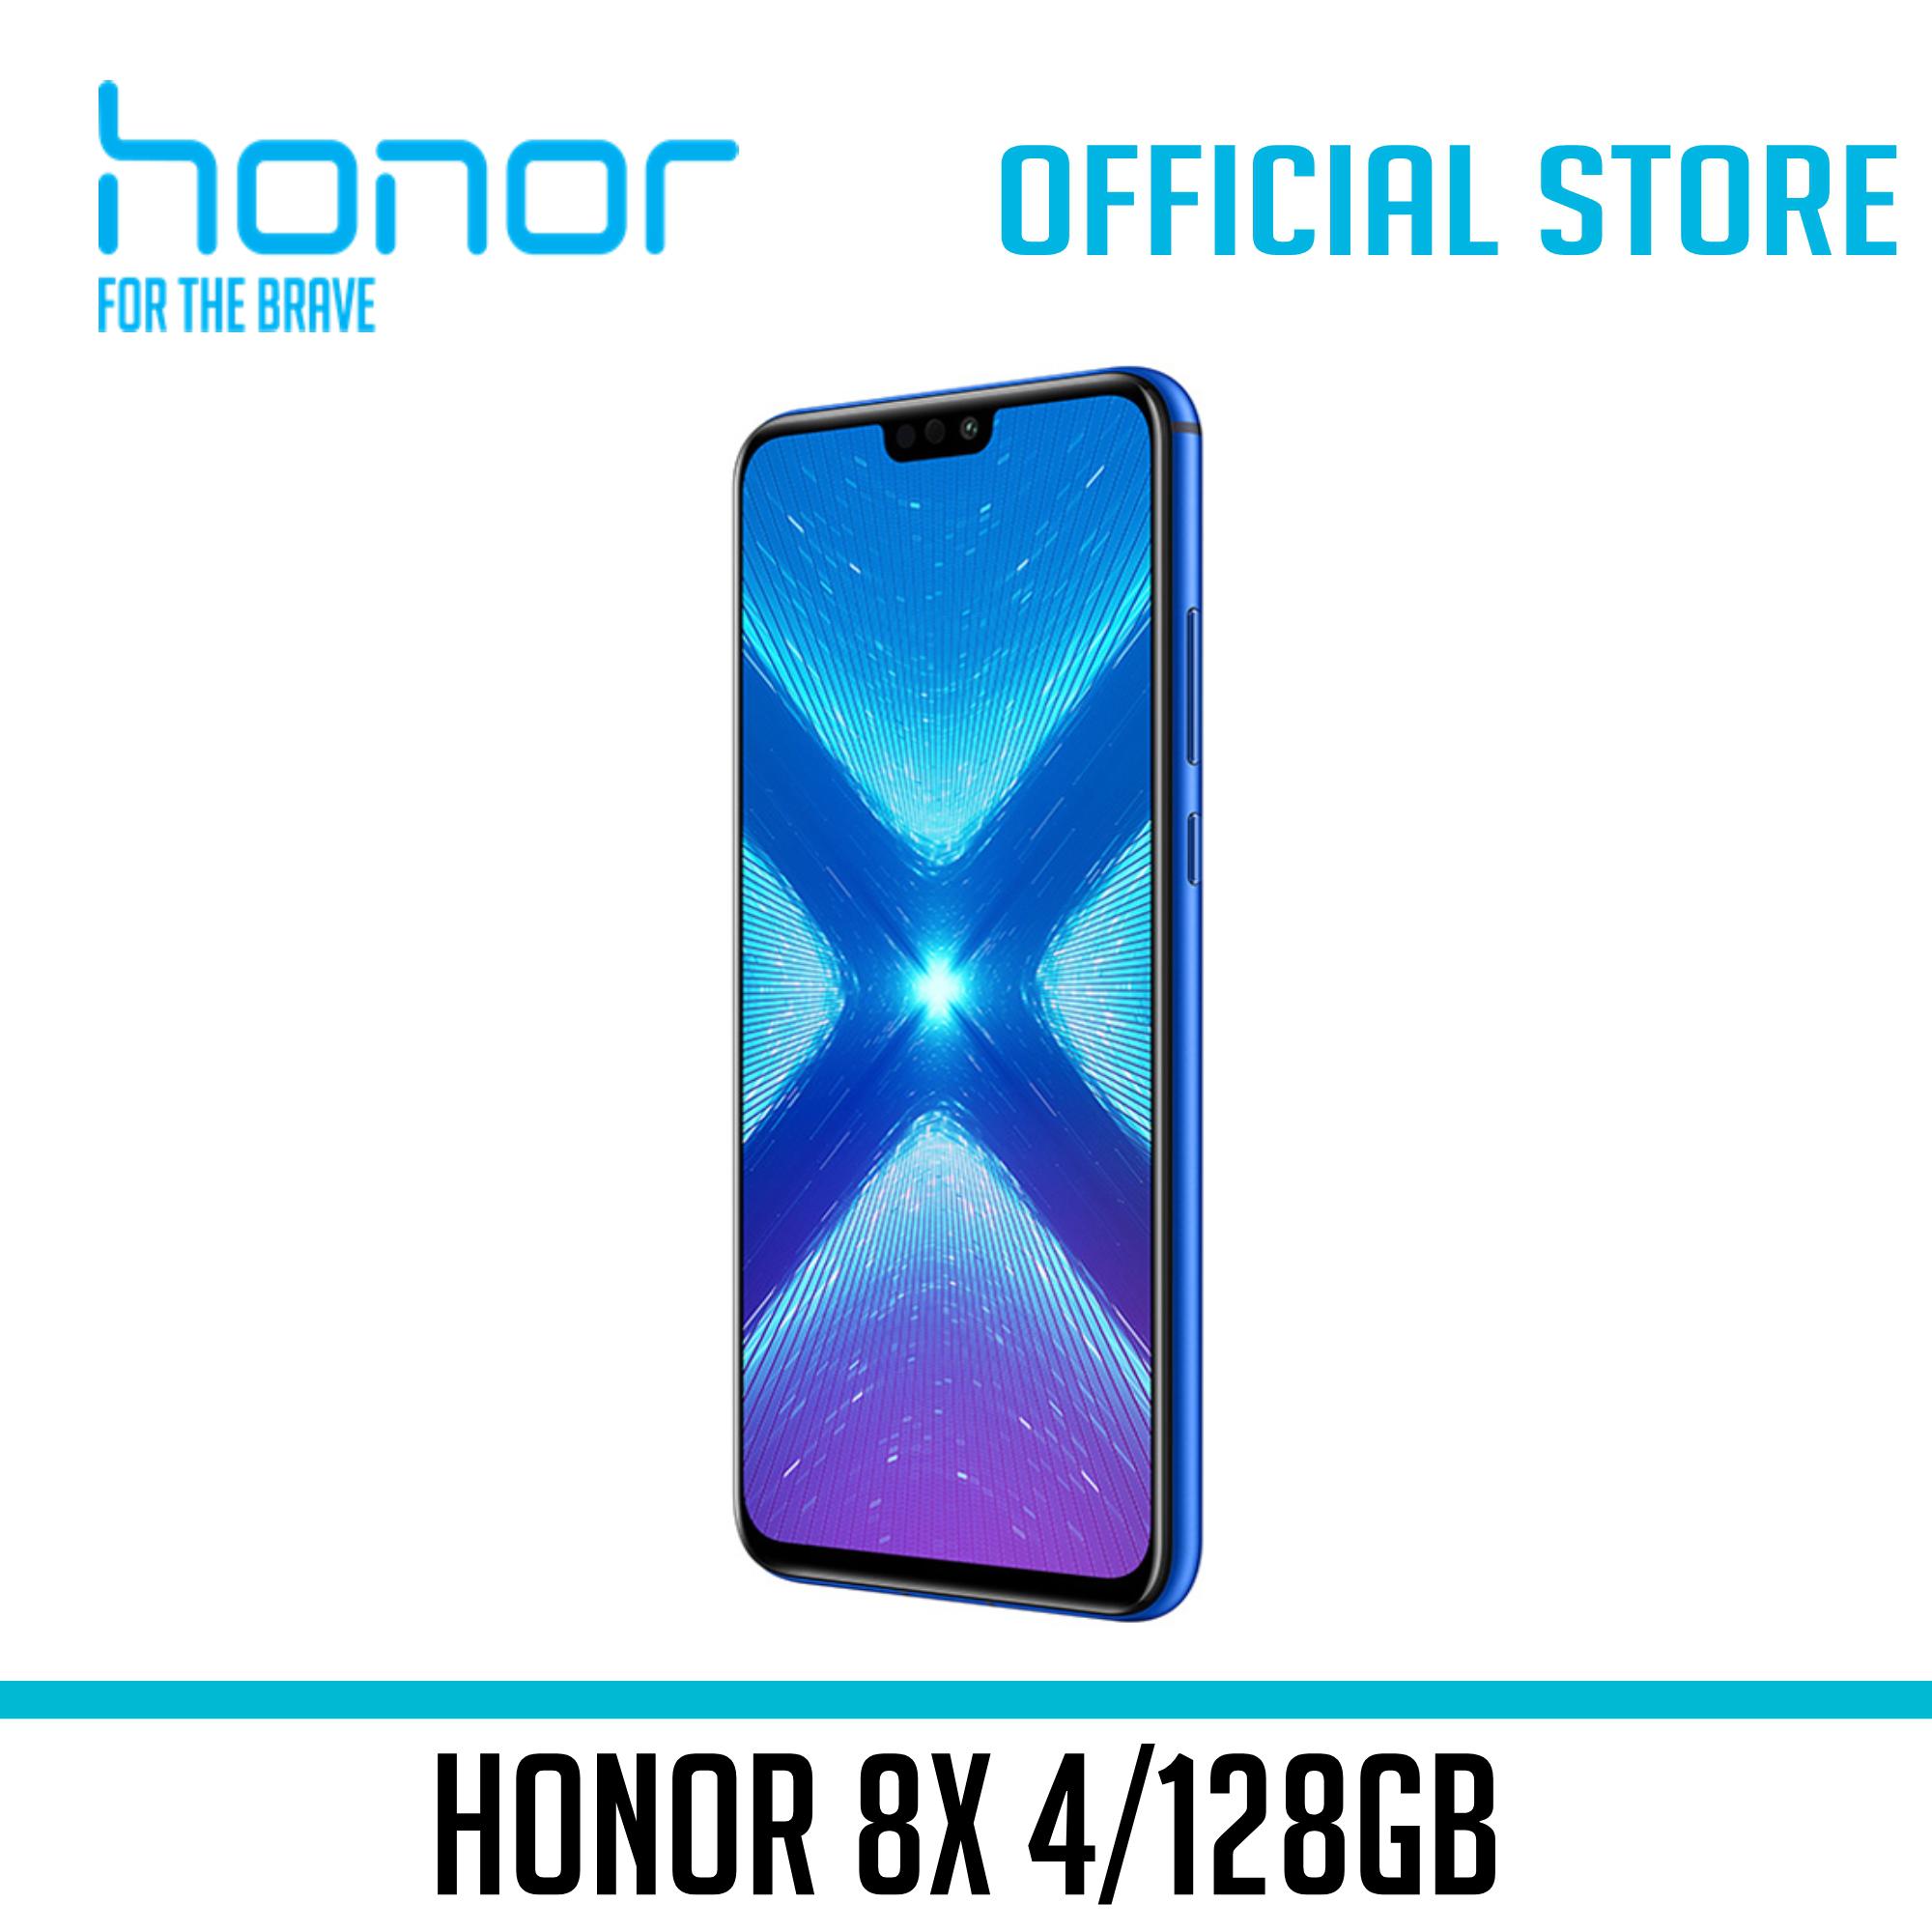 Honor 8X 4/128GB - Free Honor 8x Exclusive Gift Box